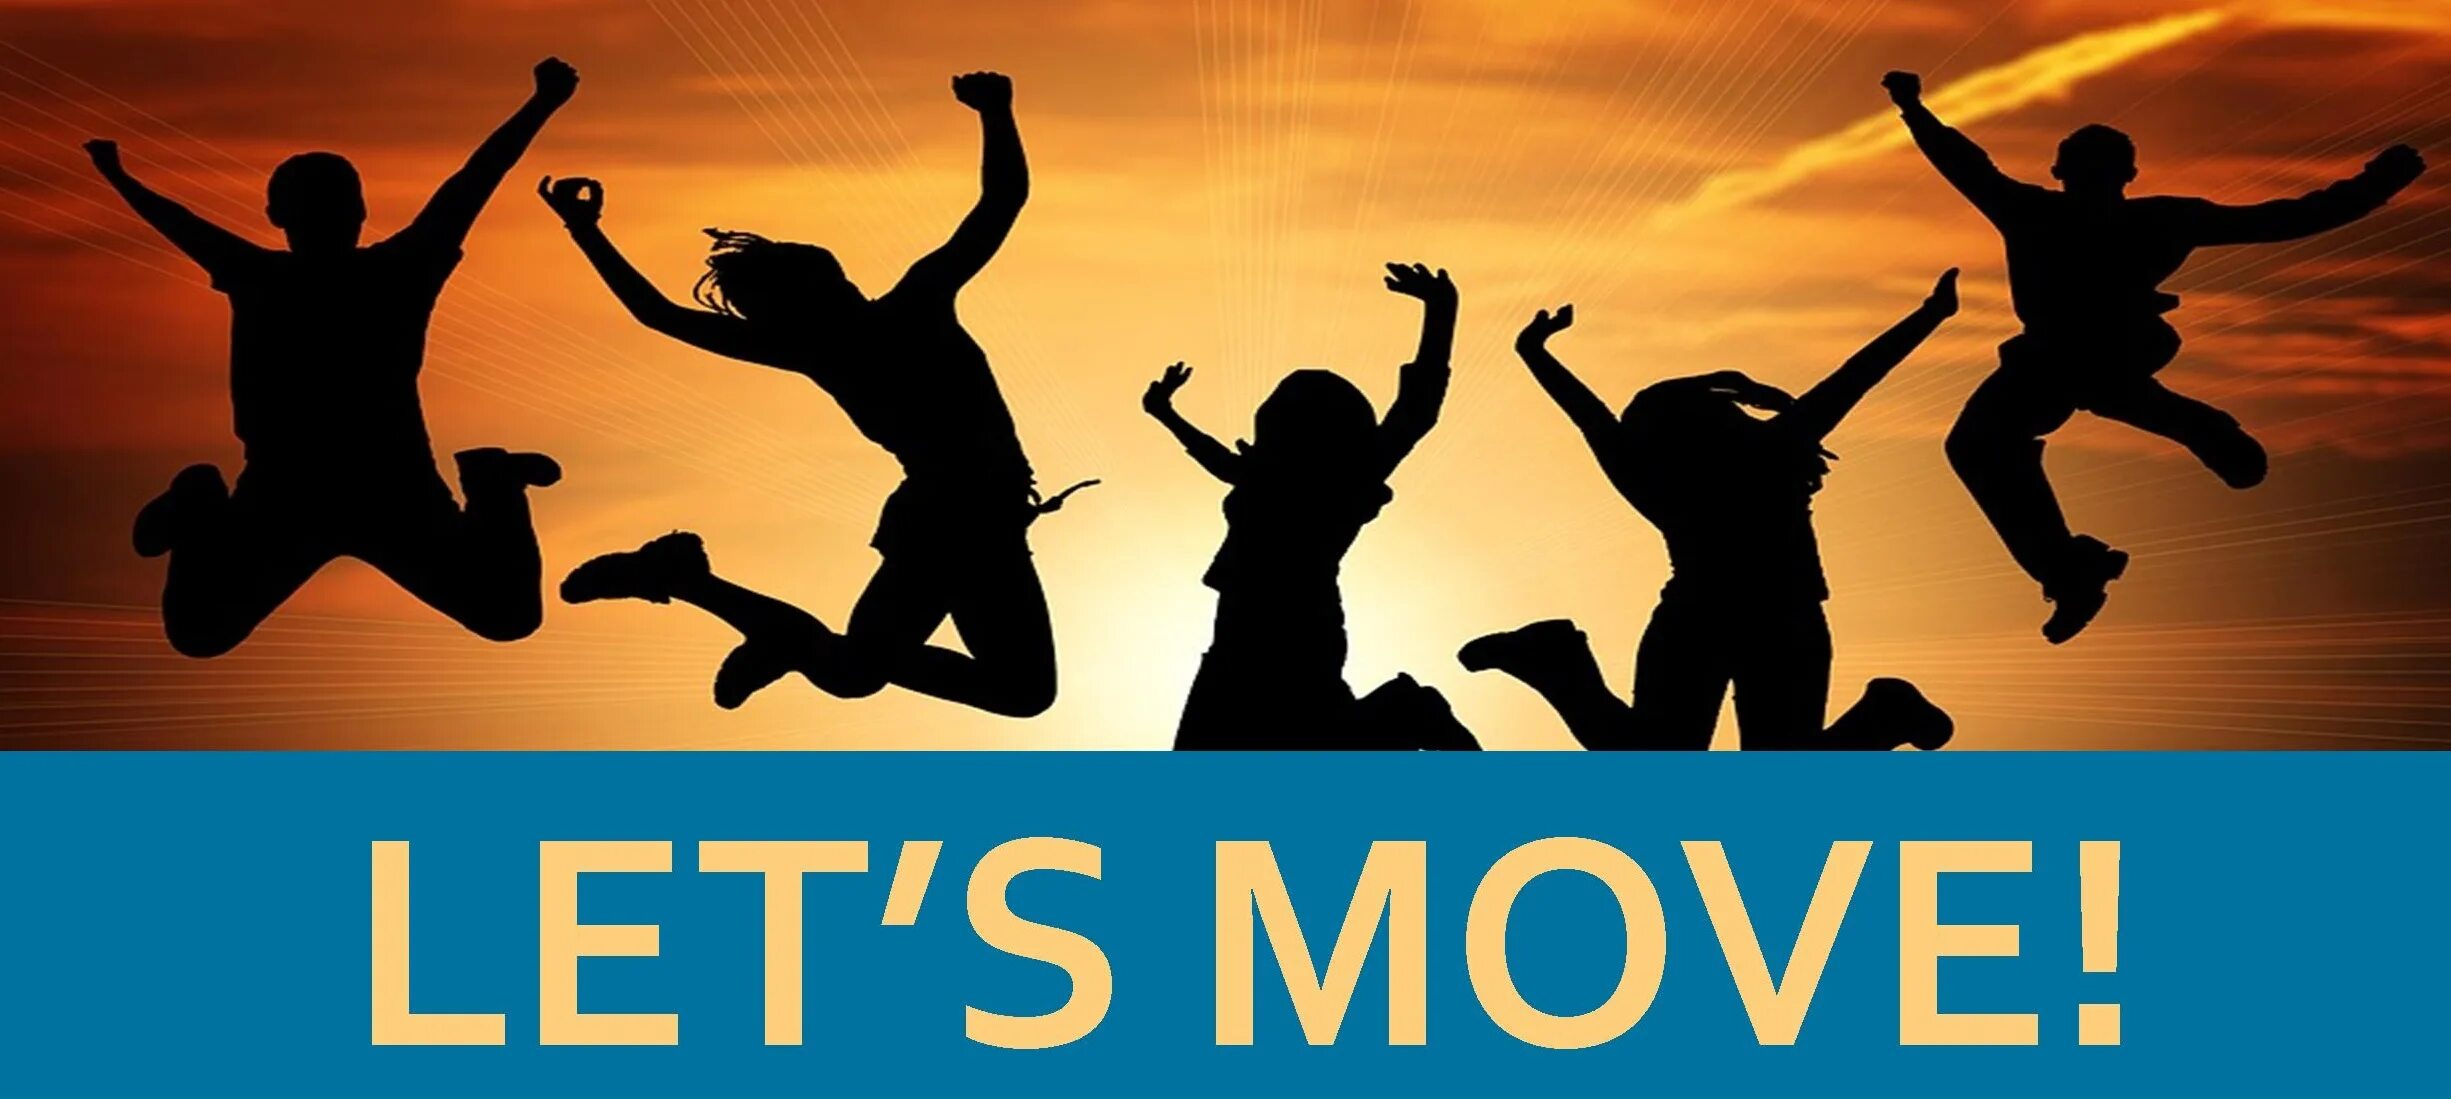 Let's move. Move картинка. Lets move Sports. Move надпись.